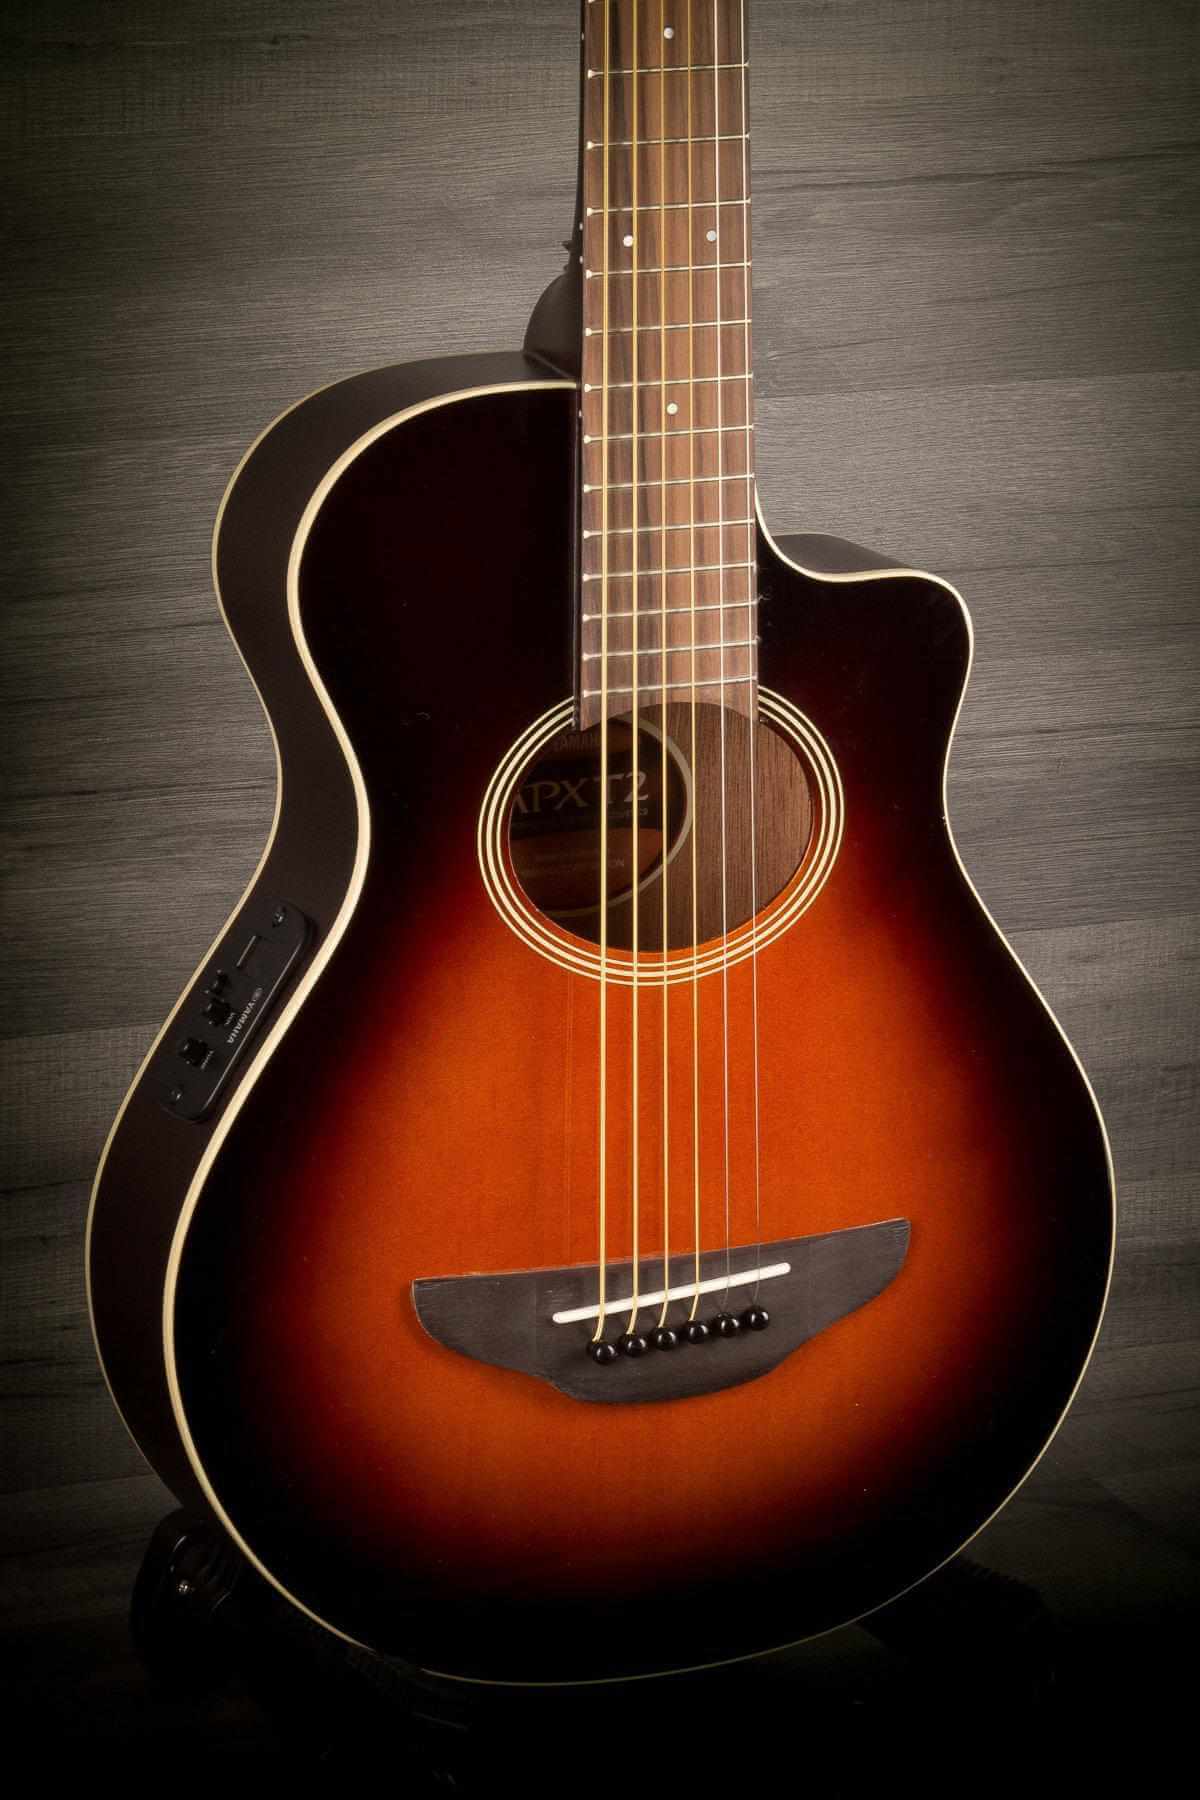 Yamaha Acoustic Guitar Yamaha APXT2 Travel Acoustic Guitar - Old Violin Sunburst